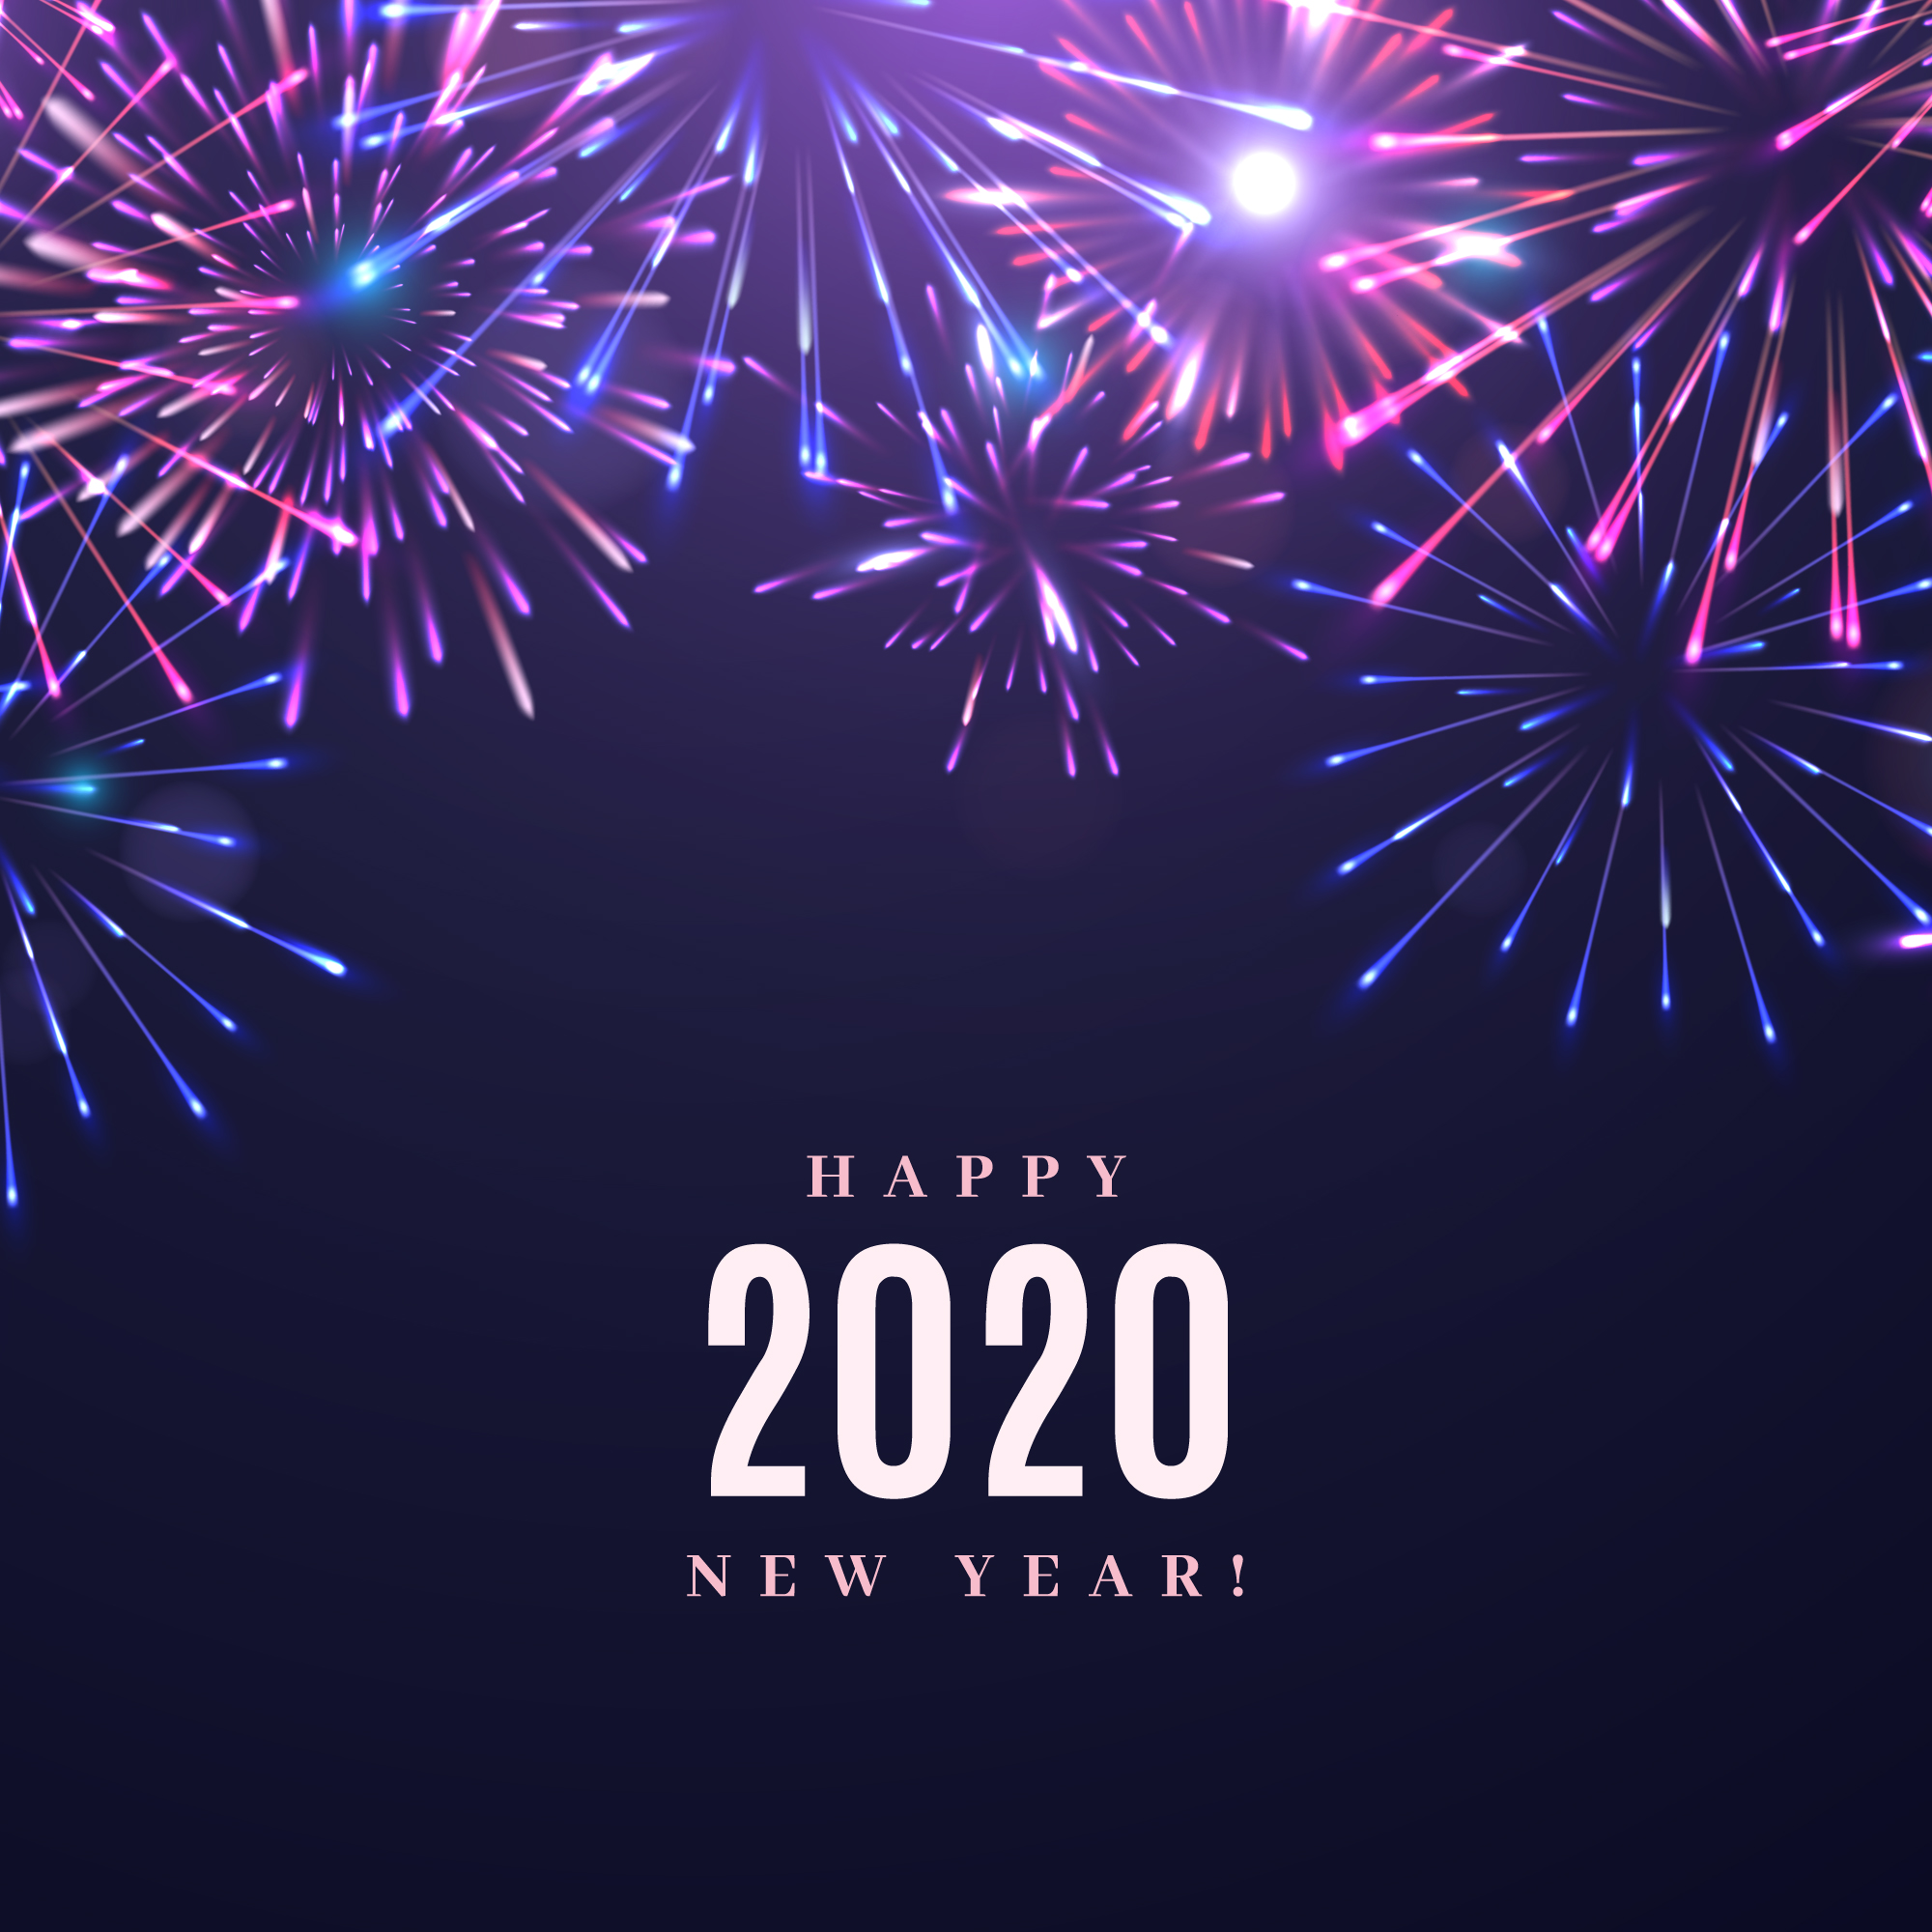 Fireworks New Year 2020 Card